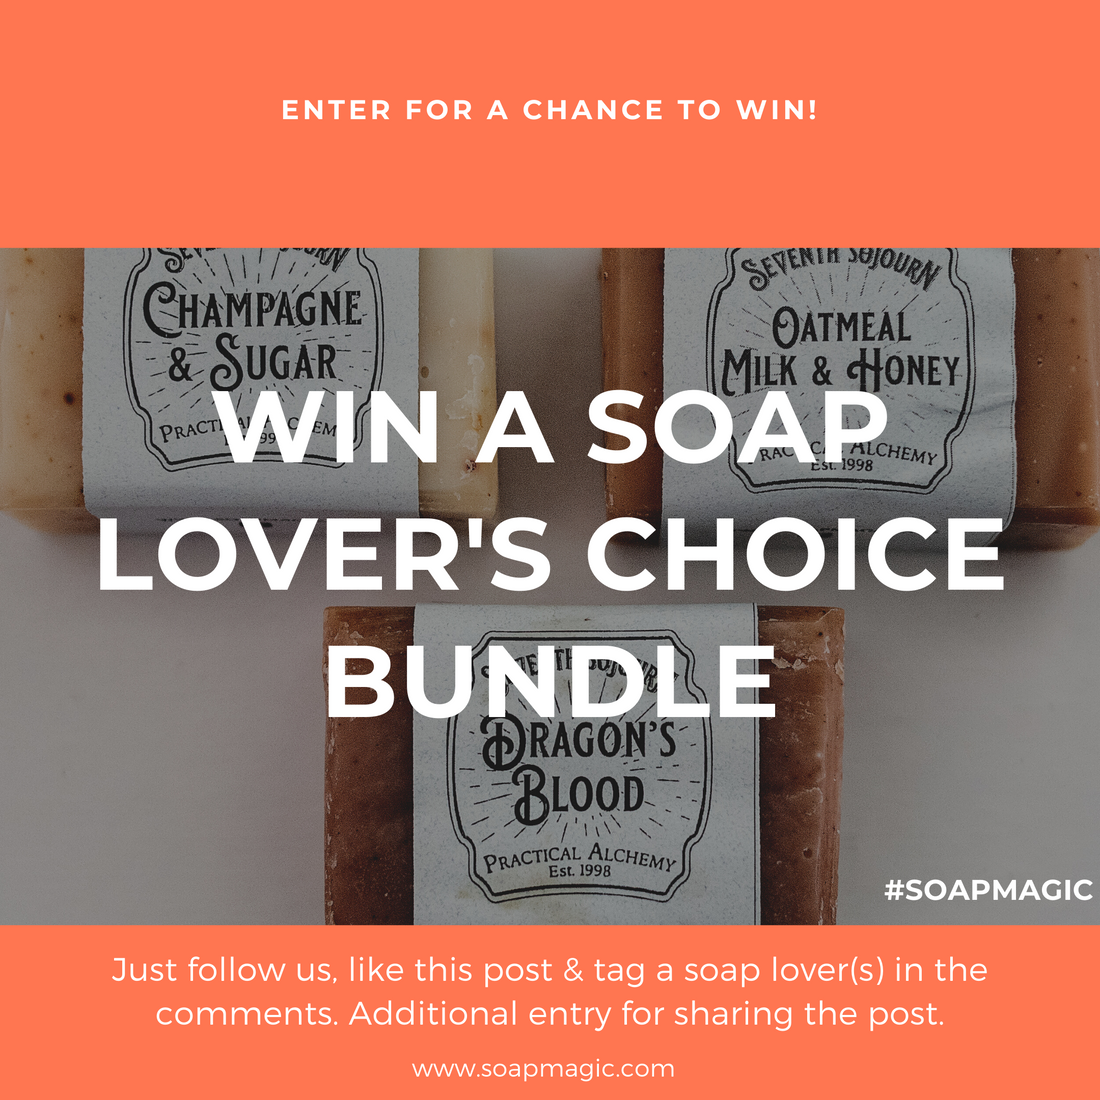 Win a Soap Lover's Choice Bundle!